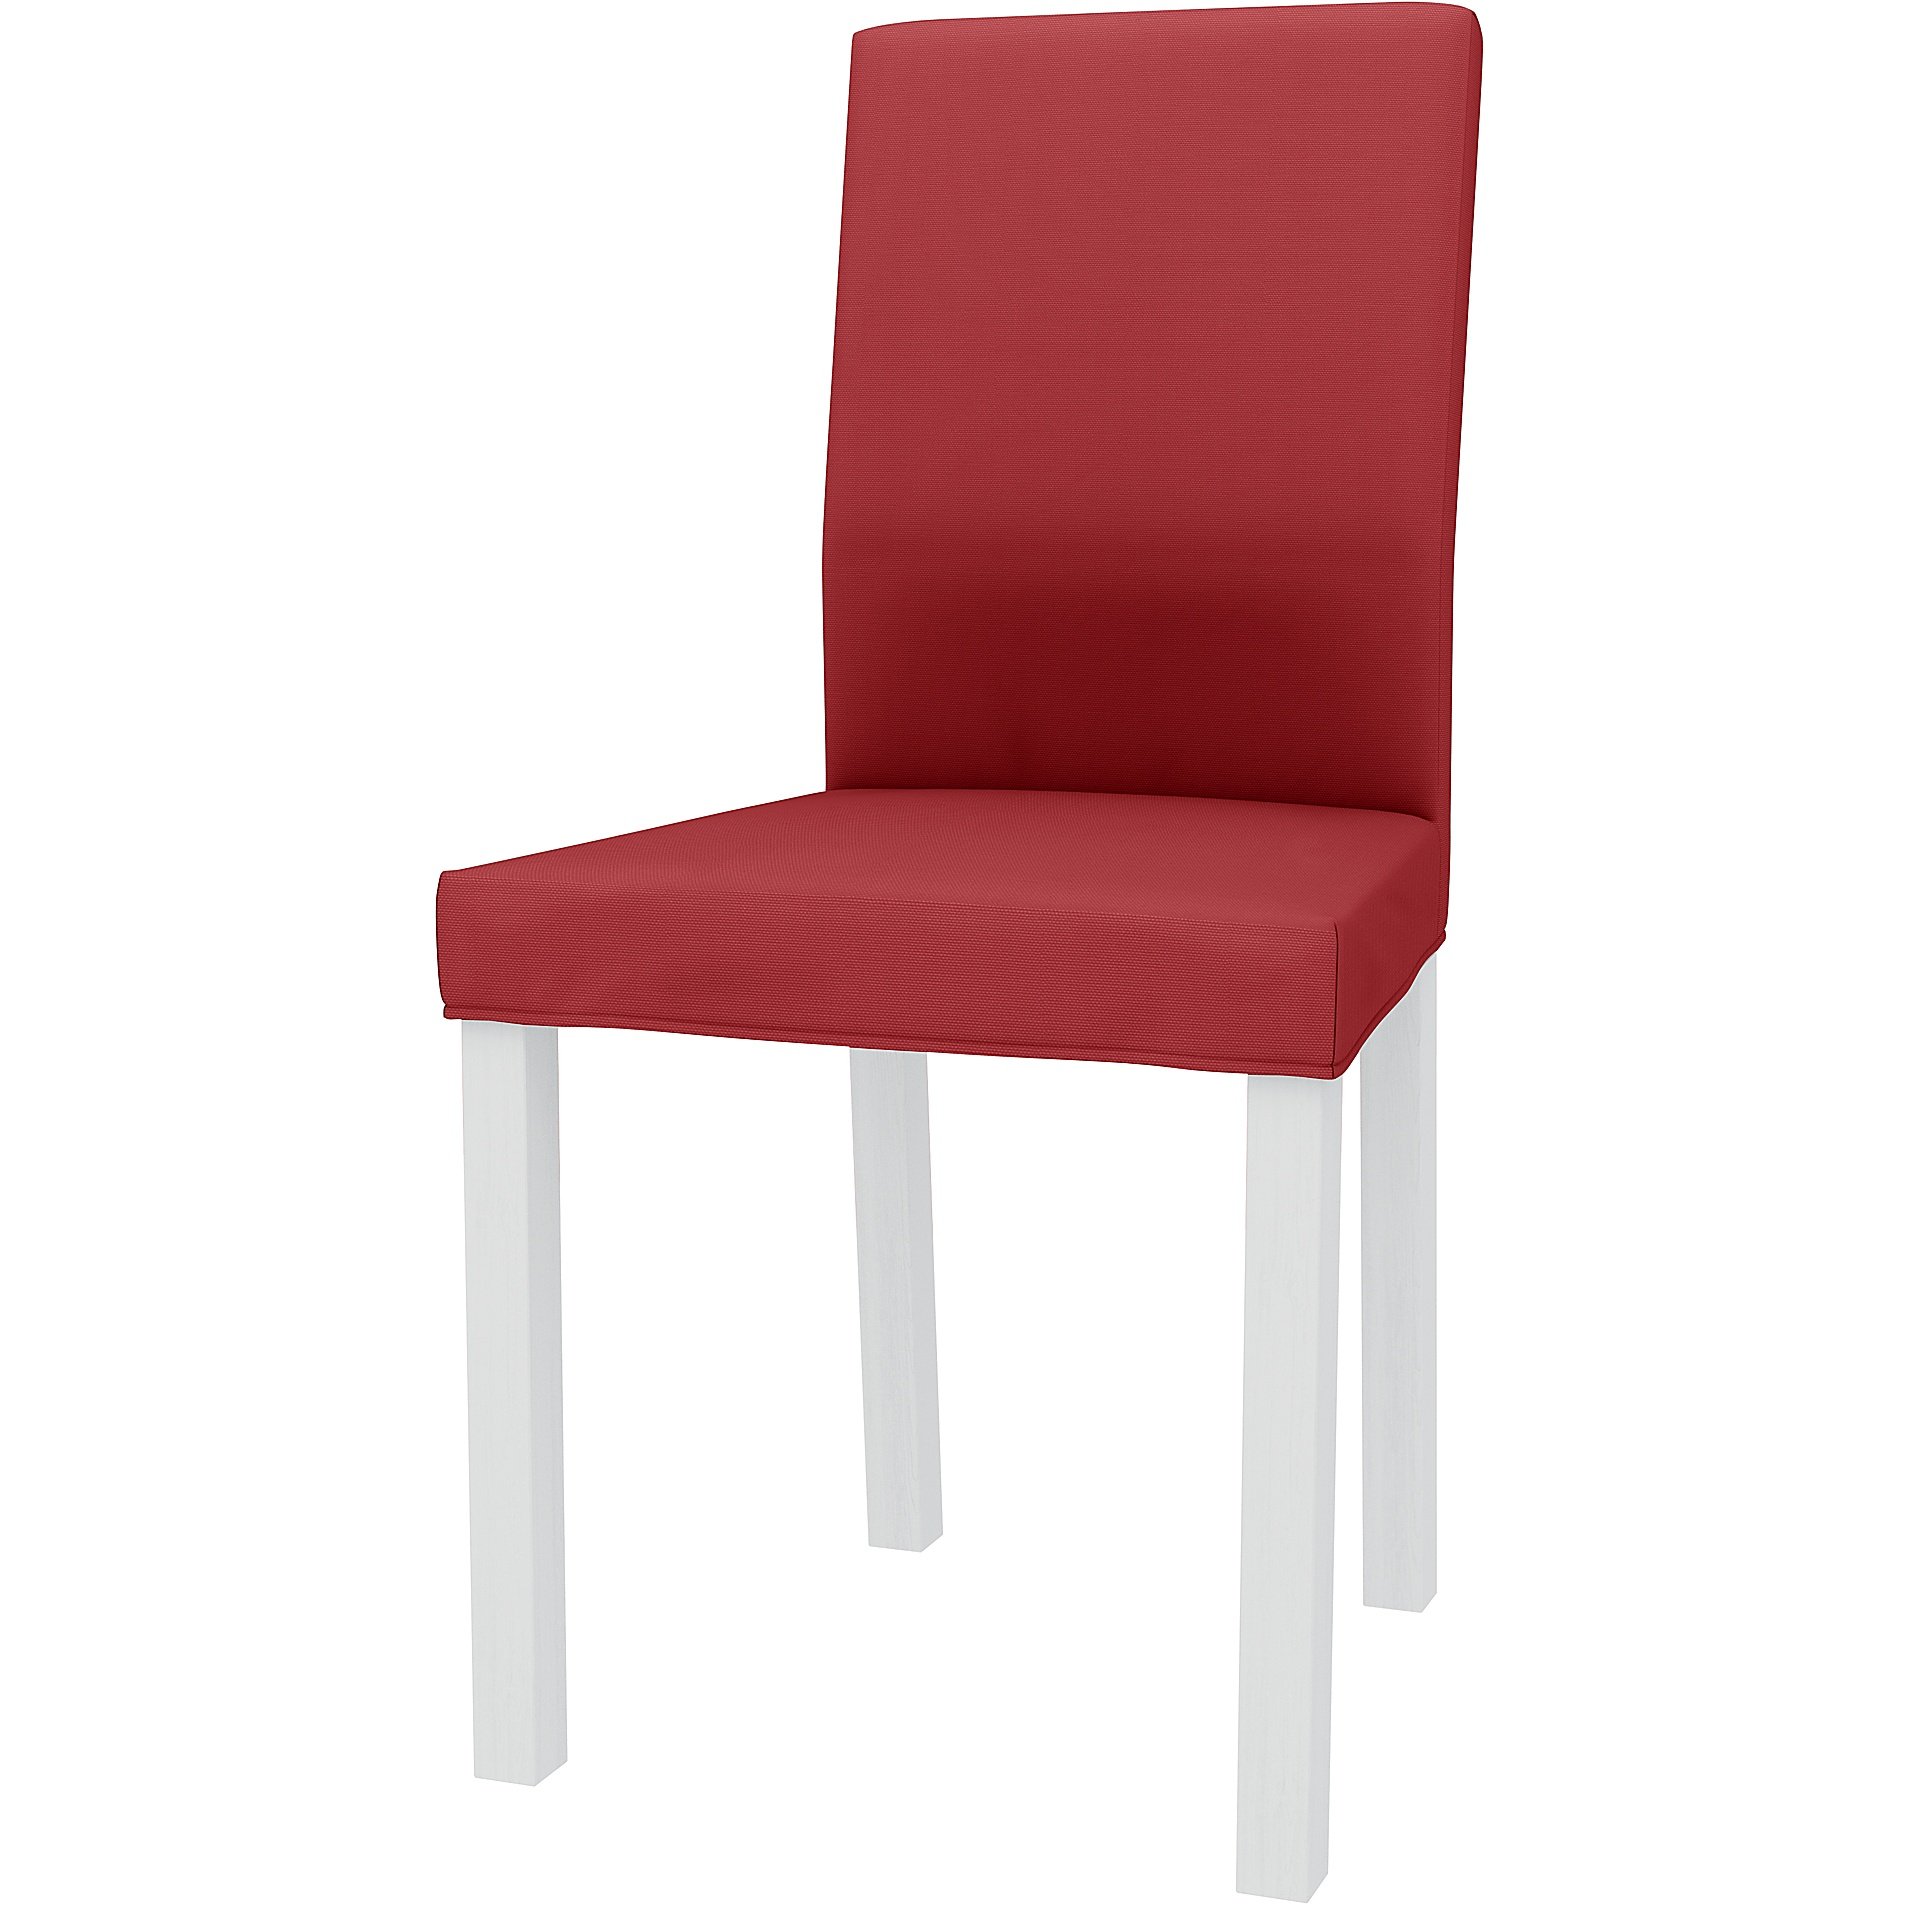 IKEA - KATTIL DINING CHAIR COVER, Scarlet Red, Cotton - Bemz